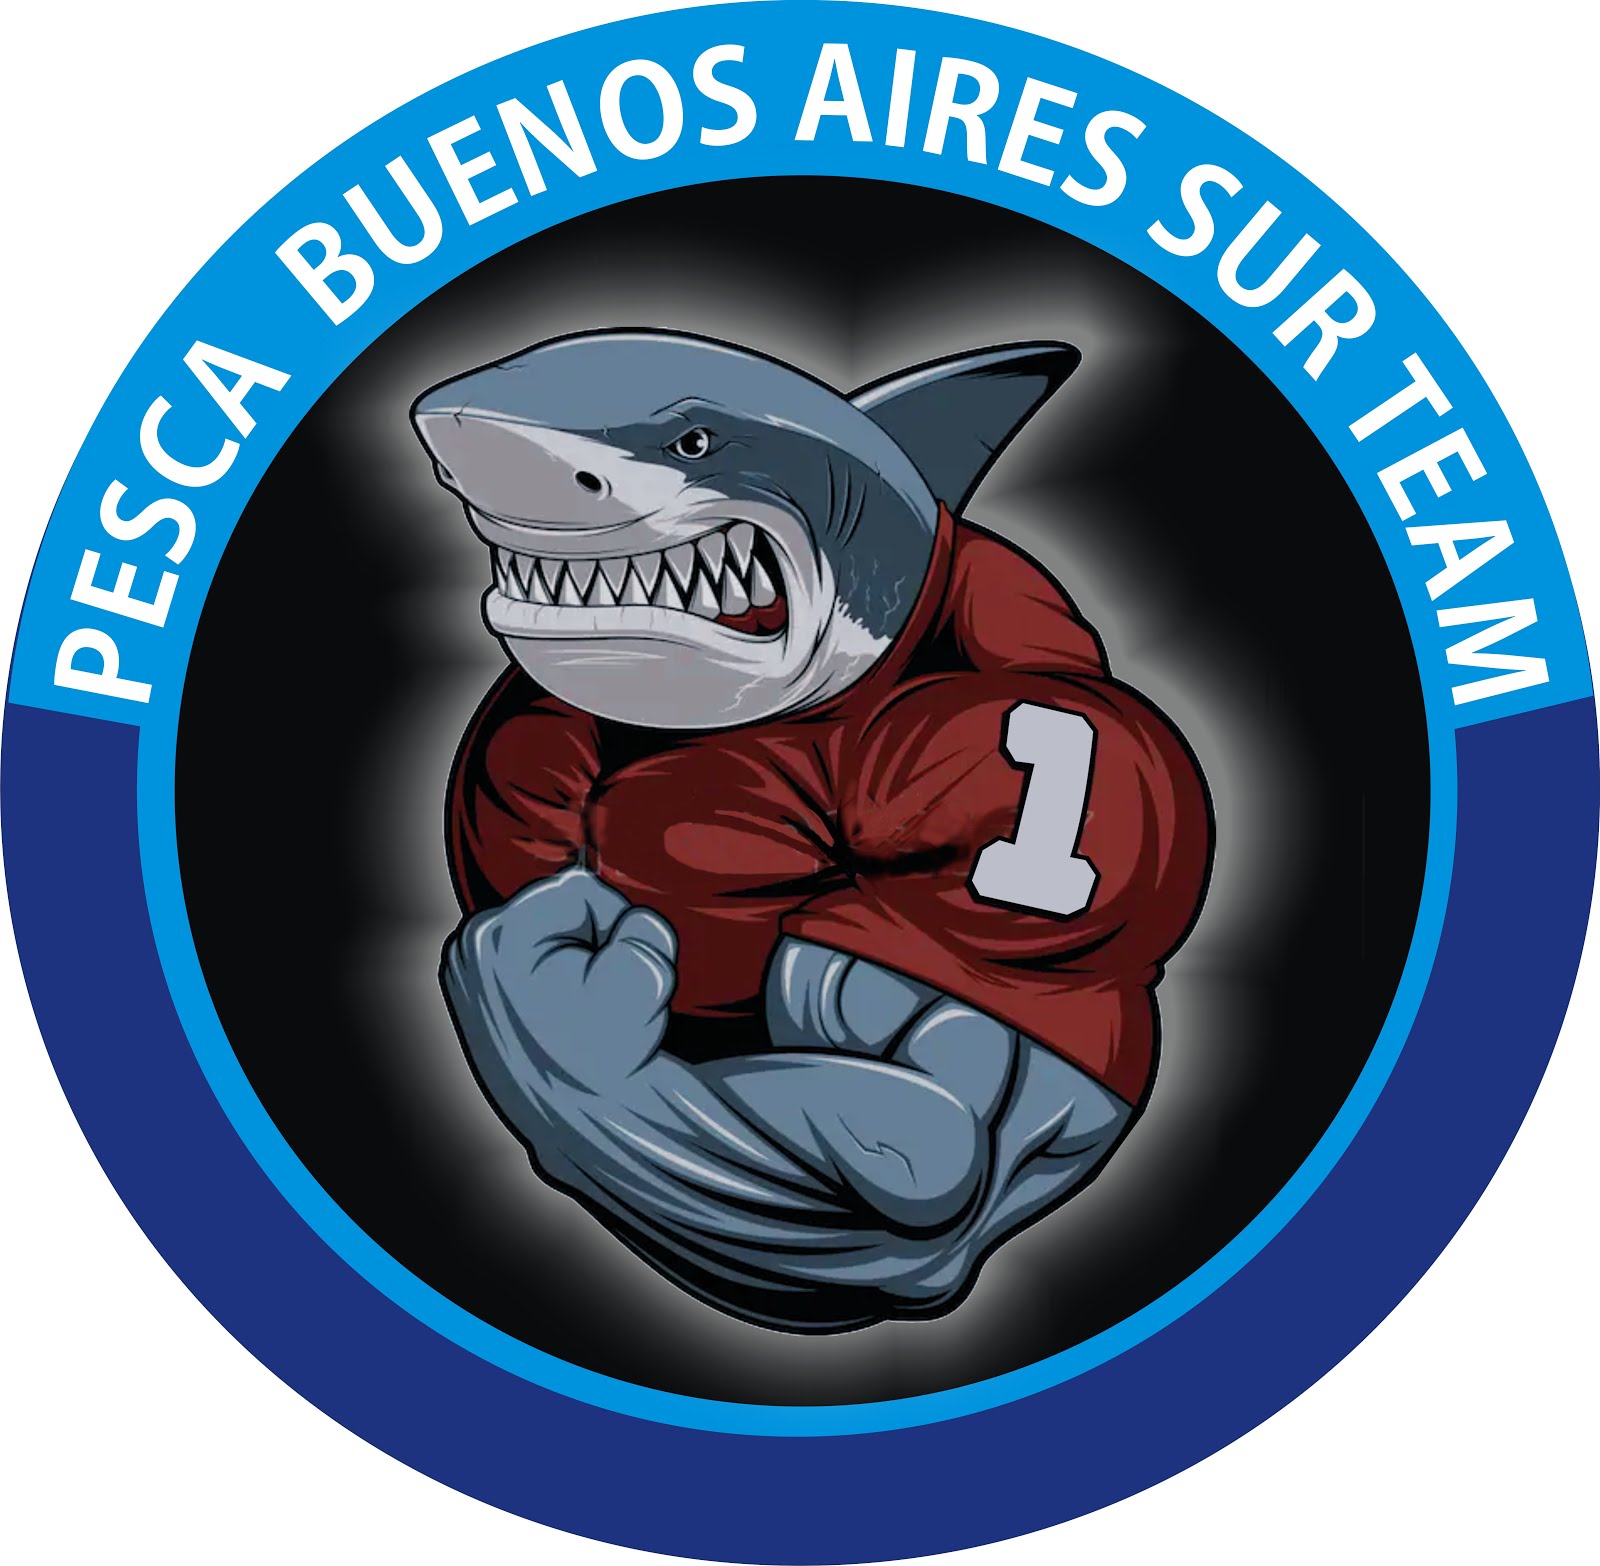 Pesca Buenos Aires Sur Team